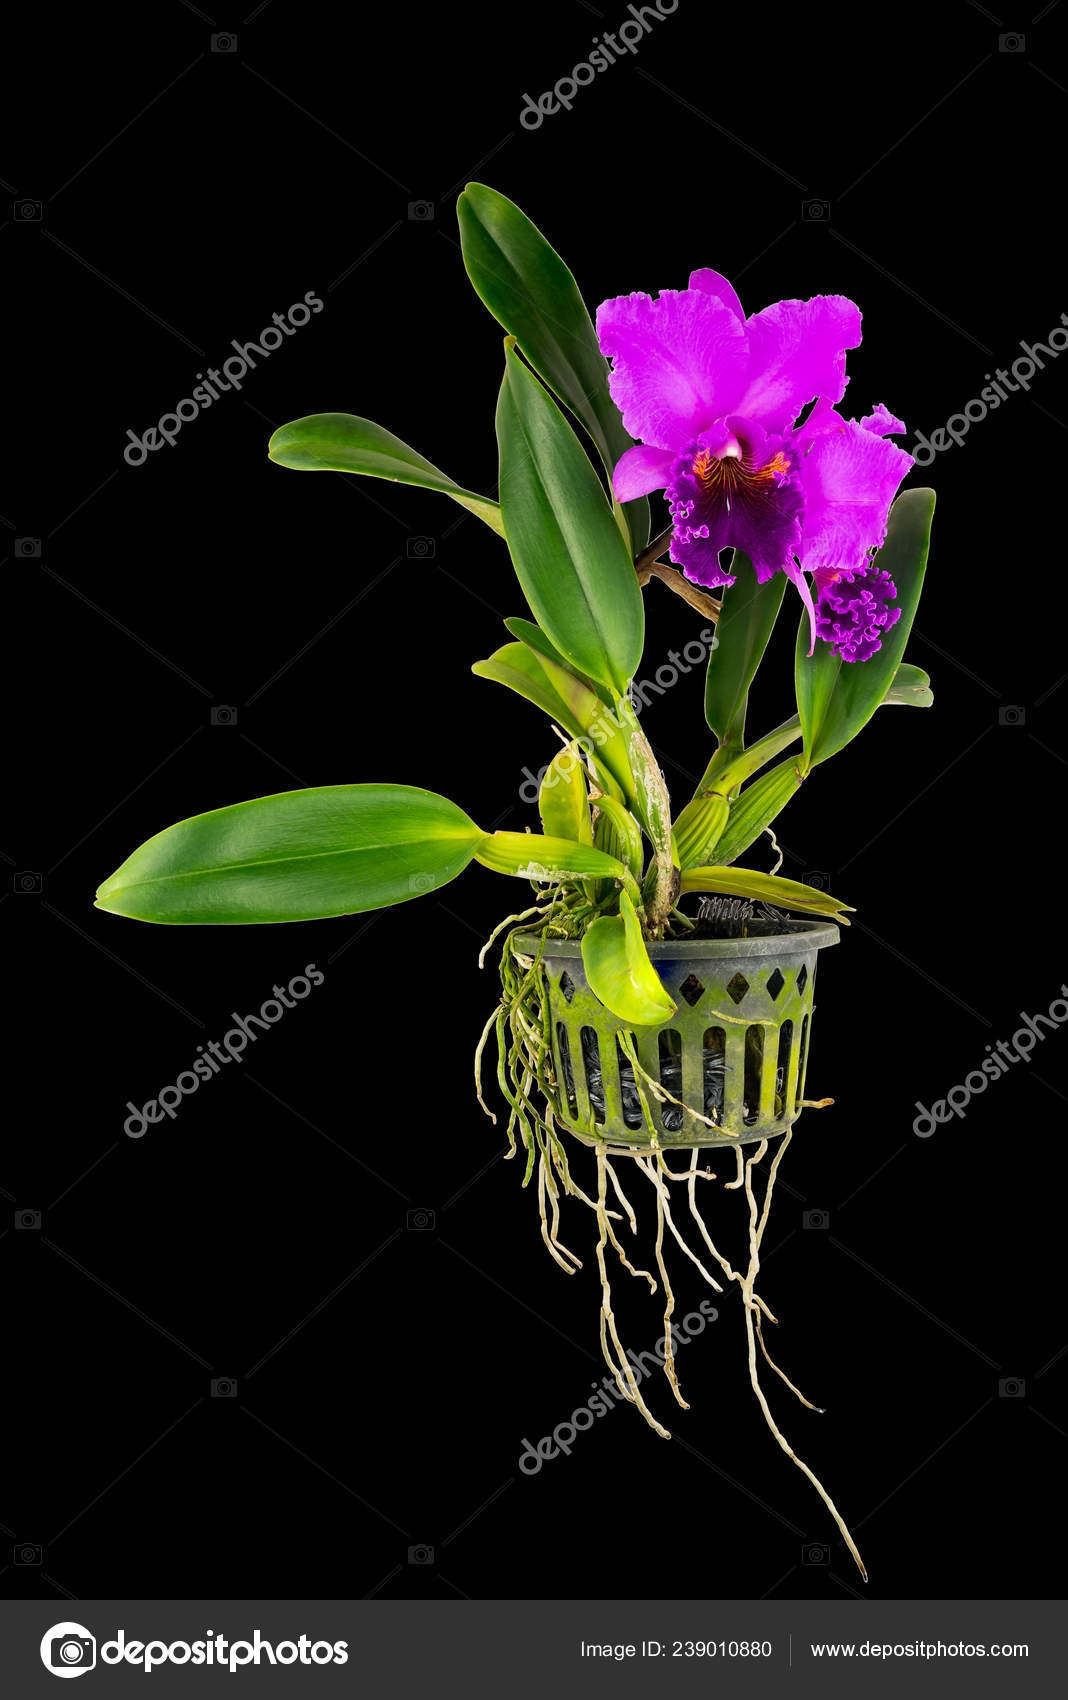 Purple Cattleya Orchid Flower Isolated Black Background Stock Photo C Takepicsforfun 239010880